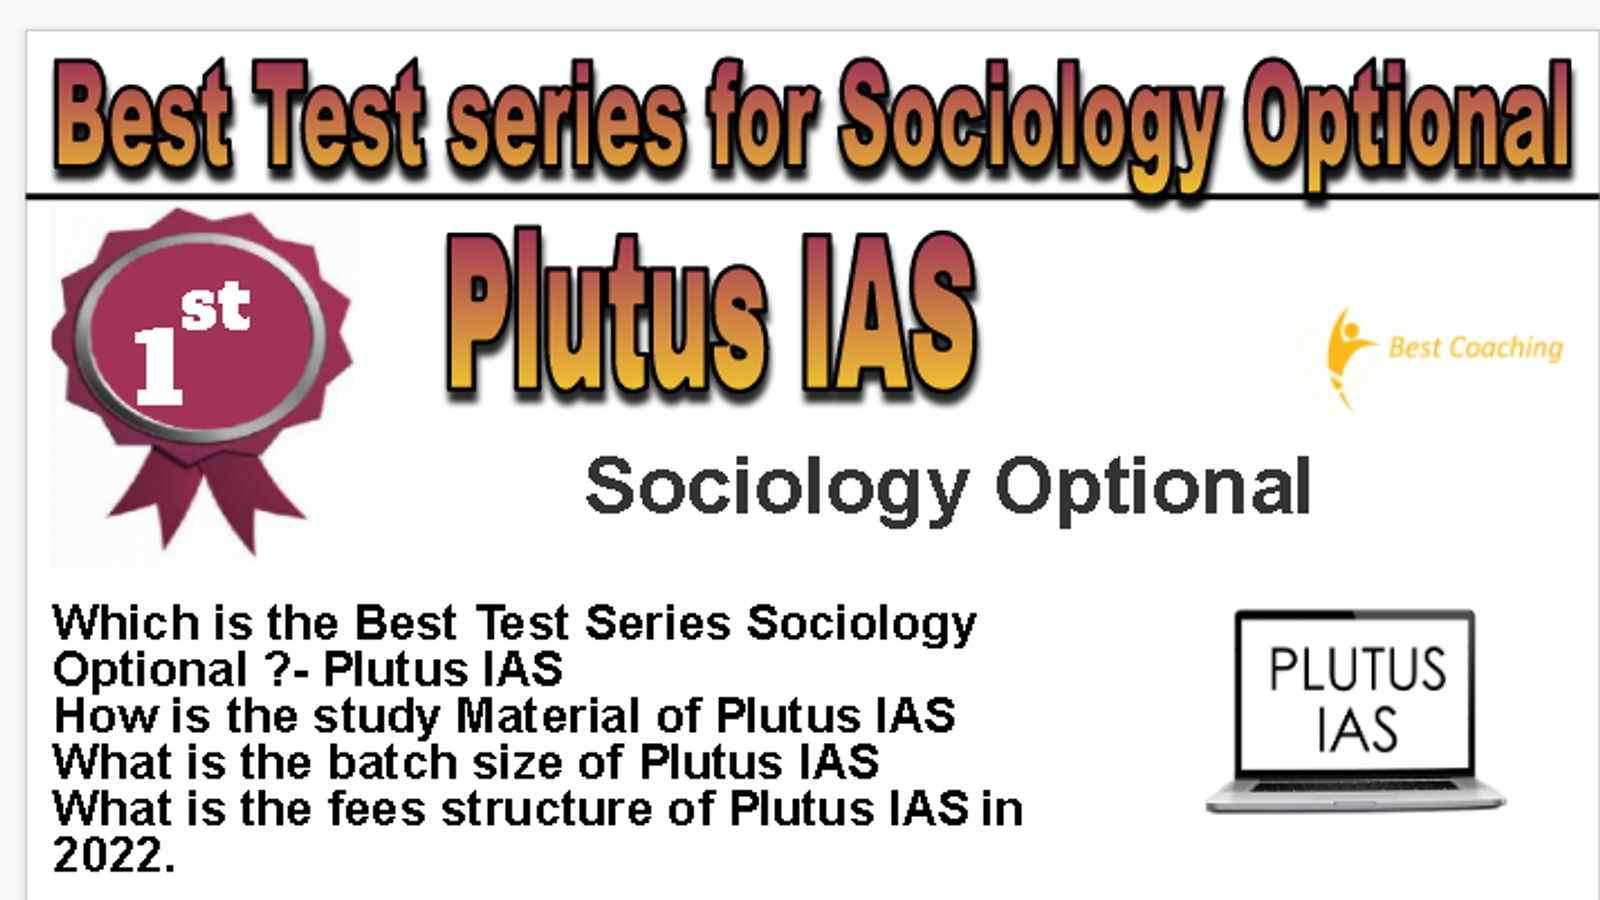 Rank 1 Best Test series for Sociology optional